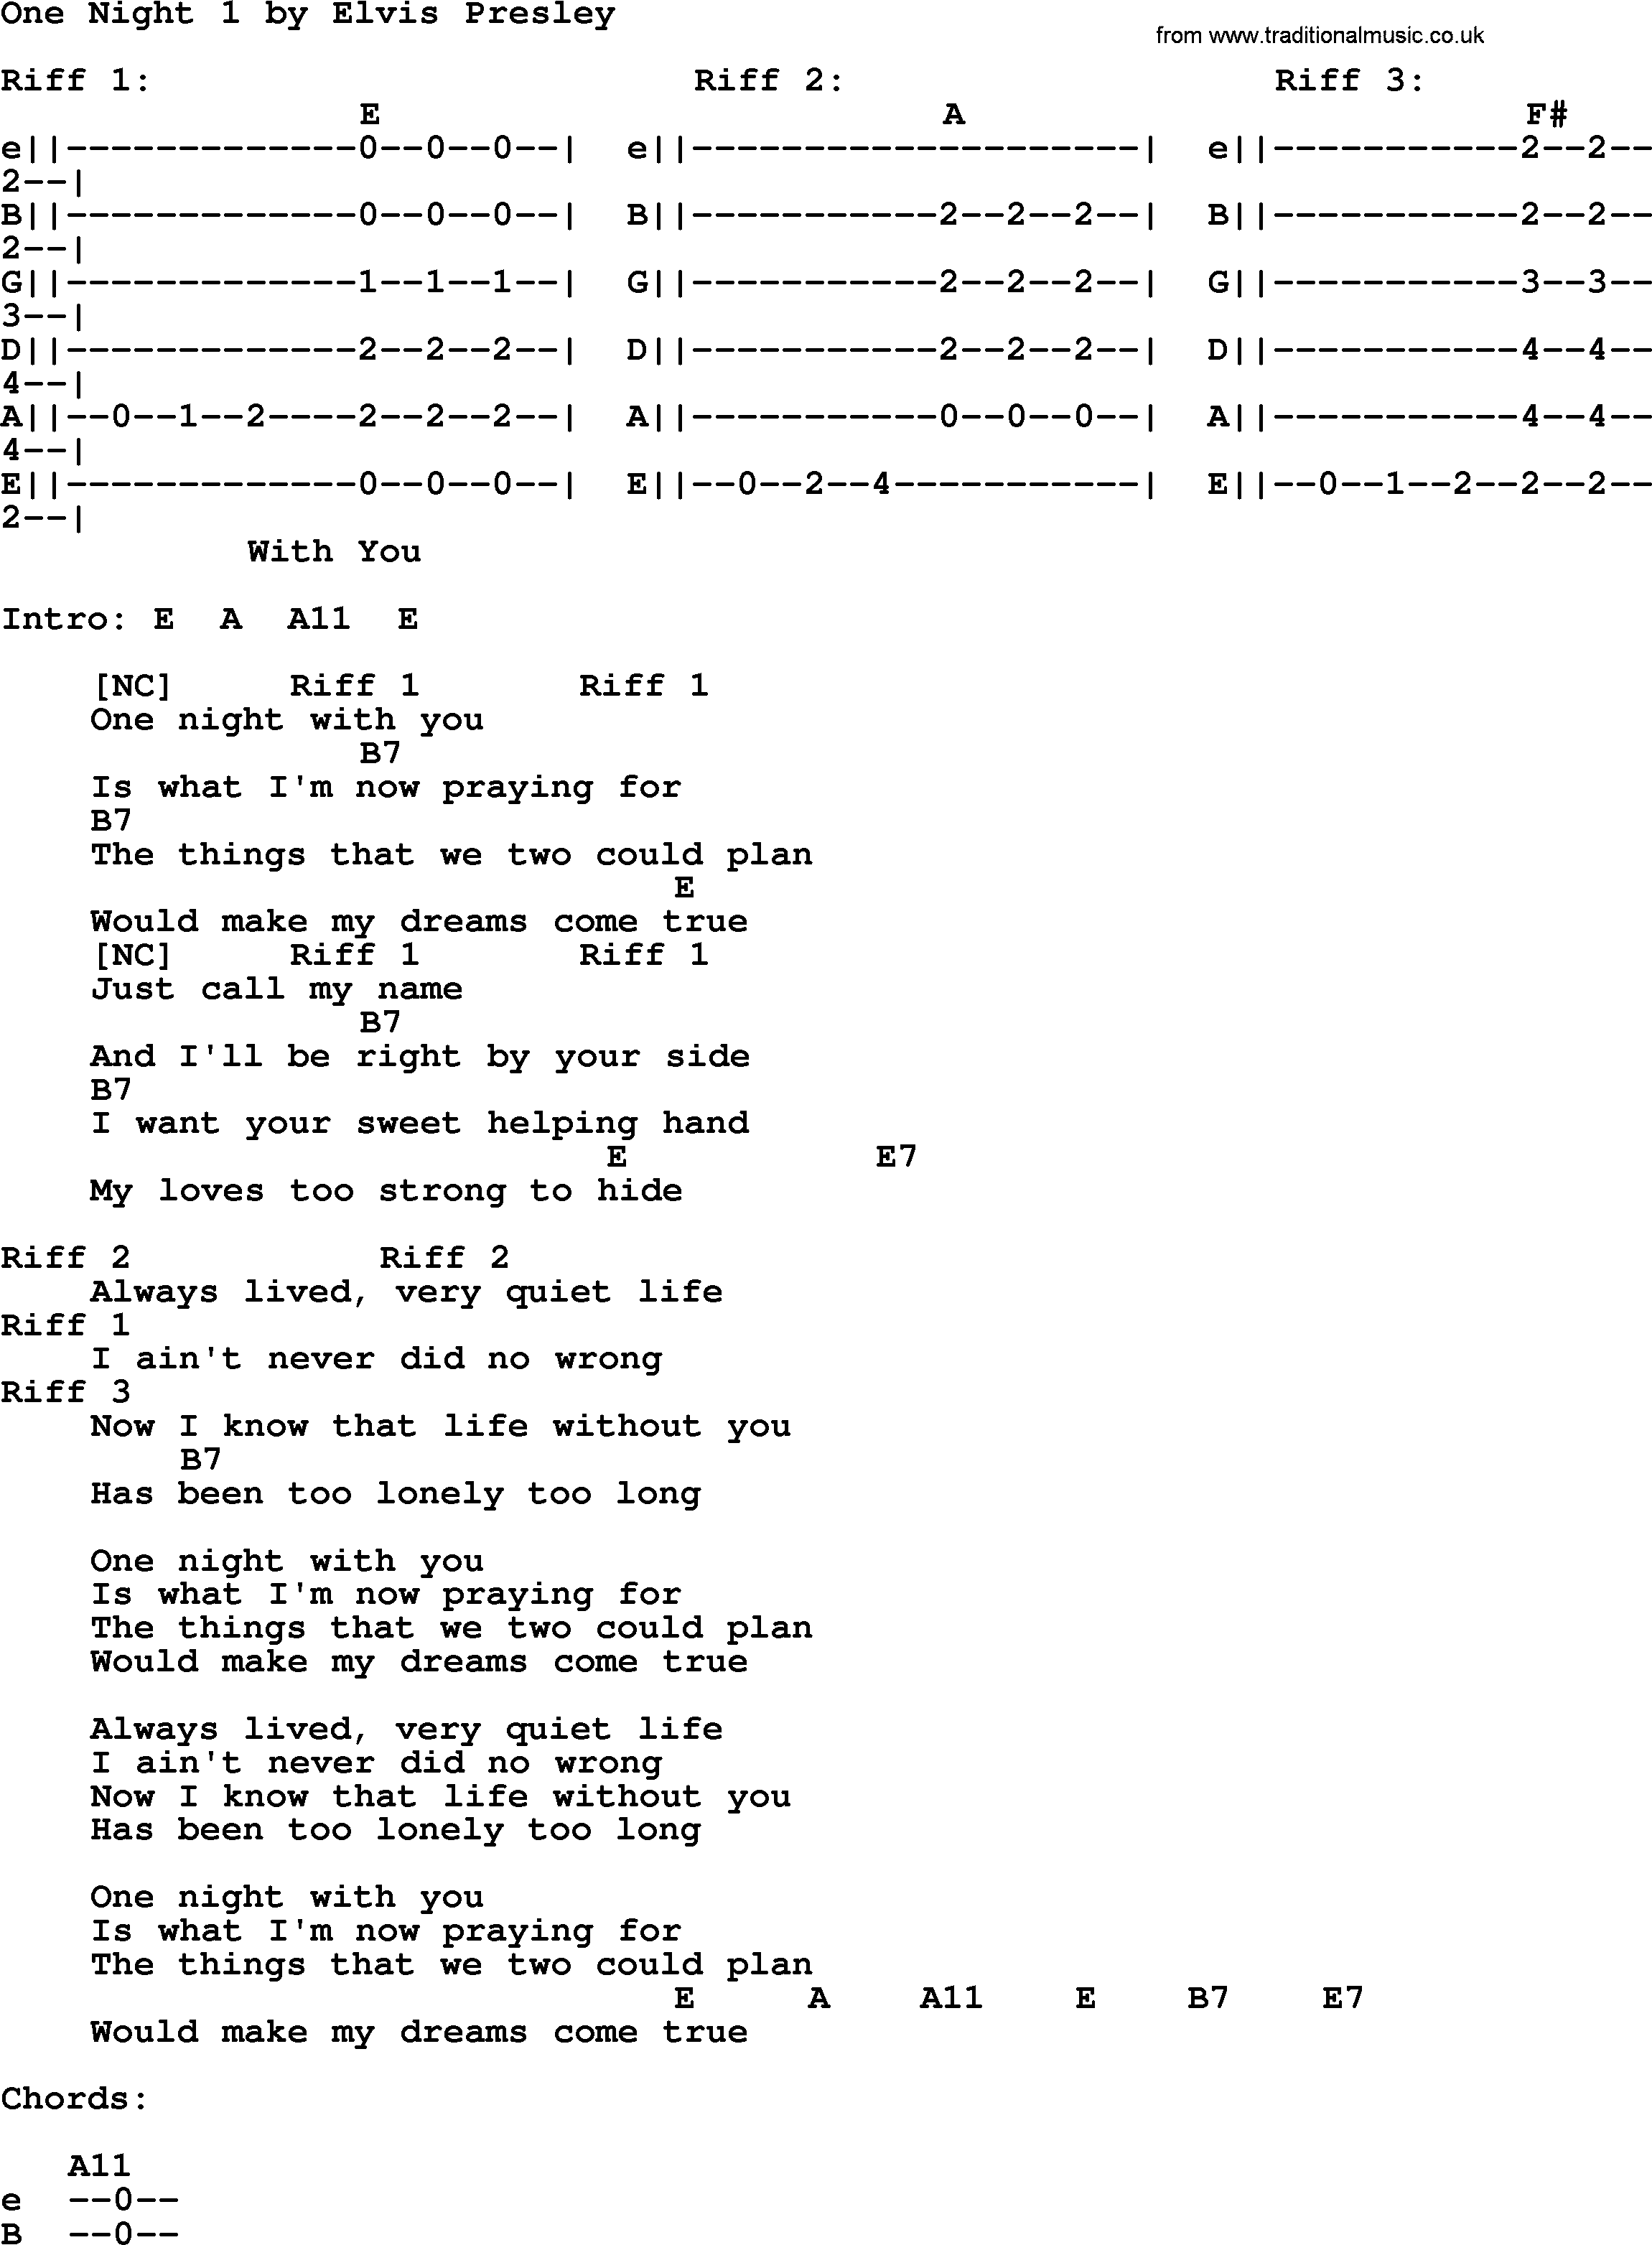 Elvis Presley song: One Night 1, lyrics and chords